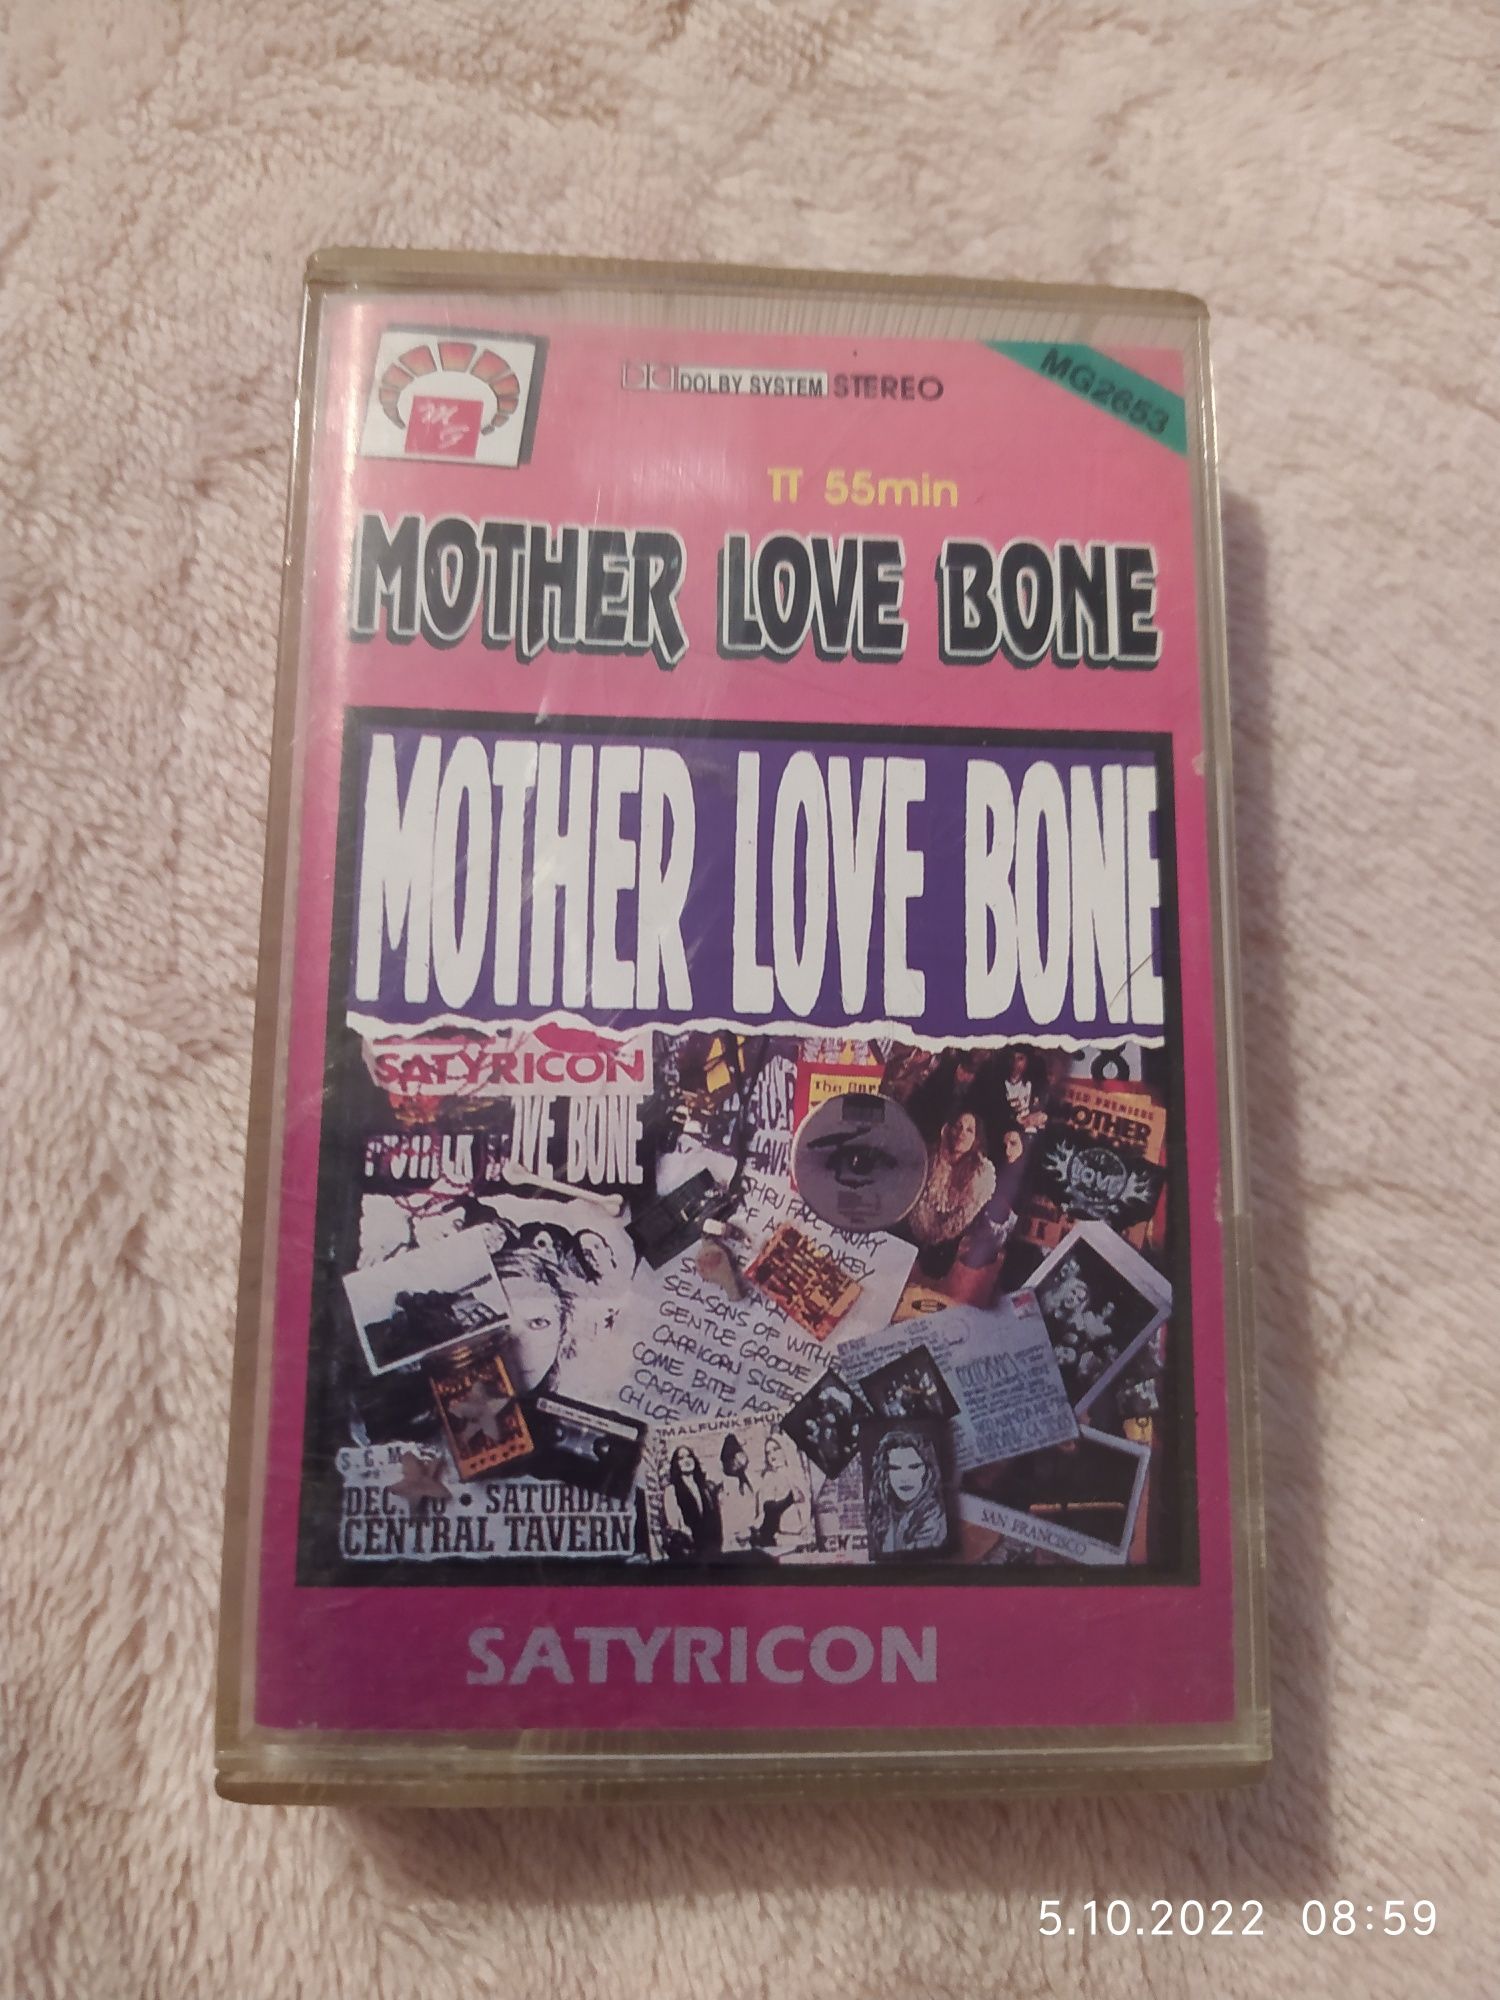 The Mother Love Bone